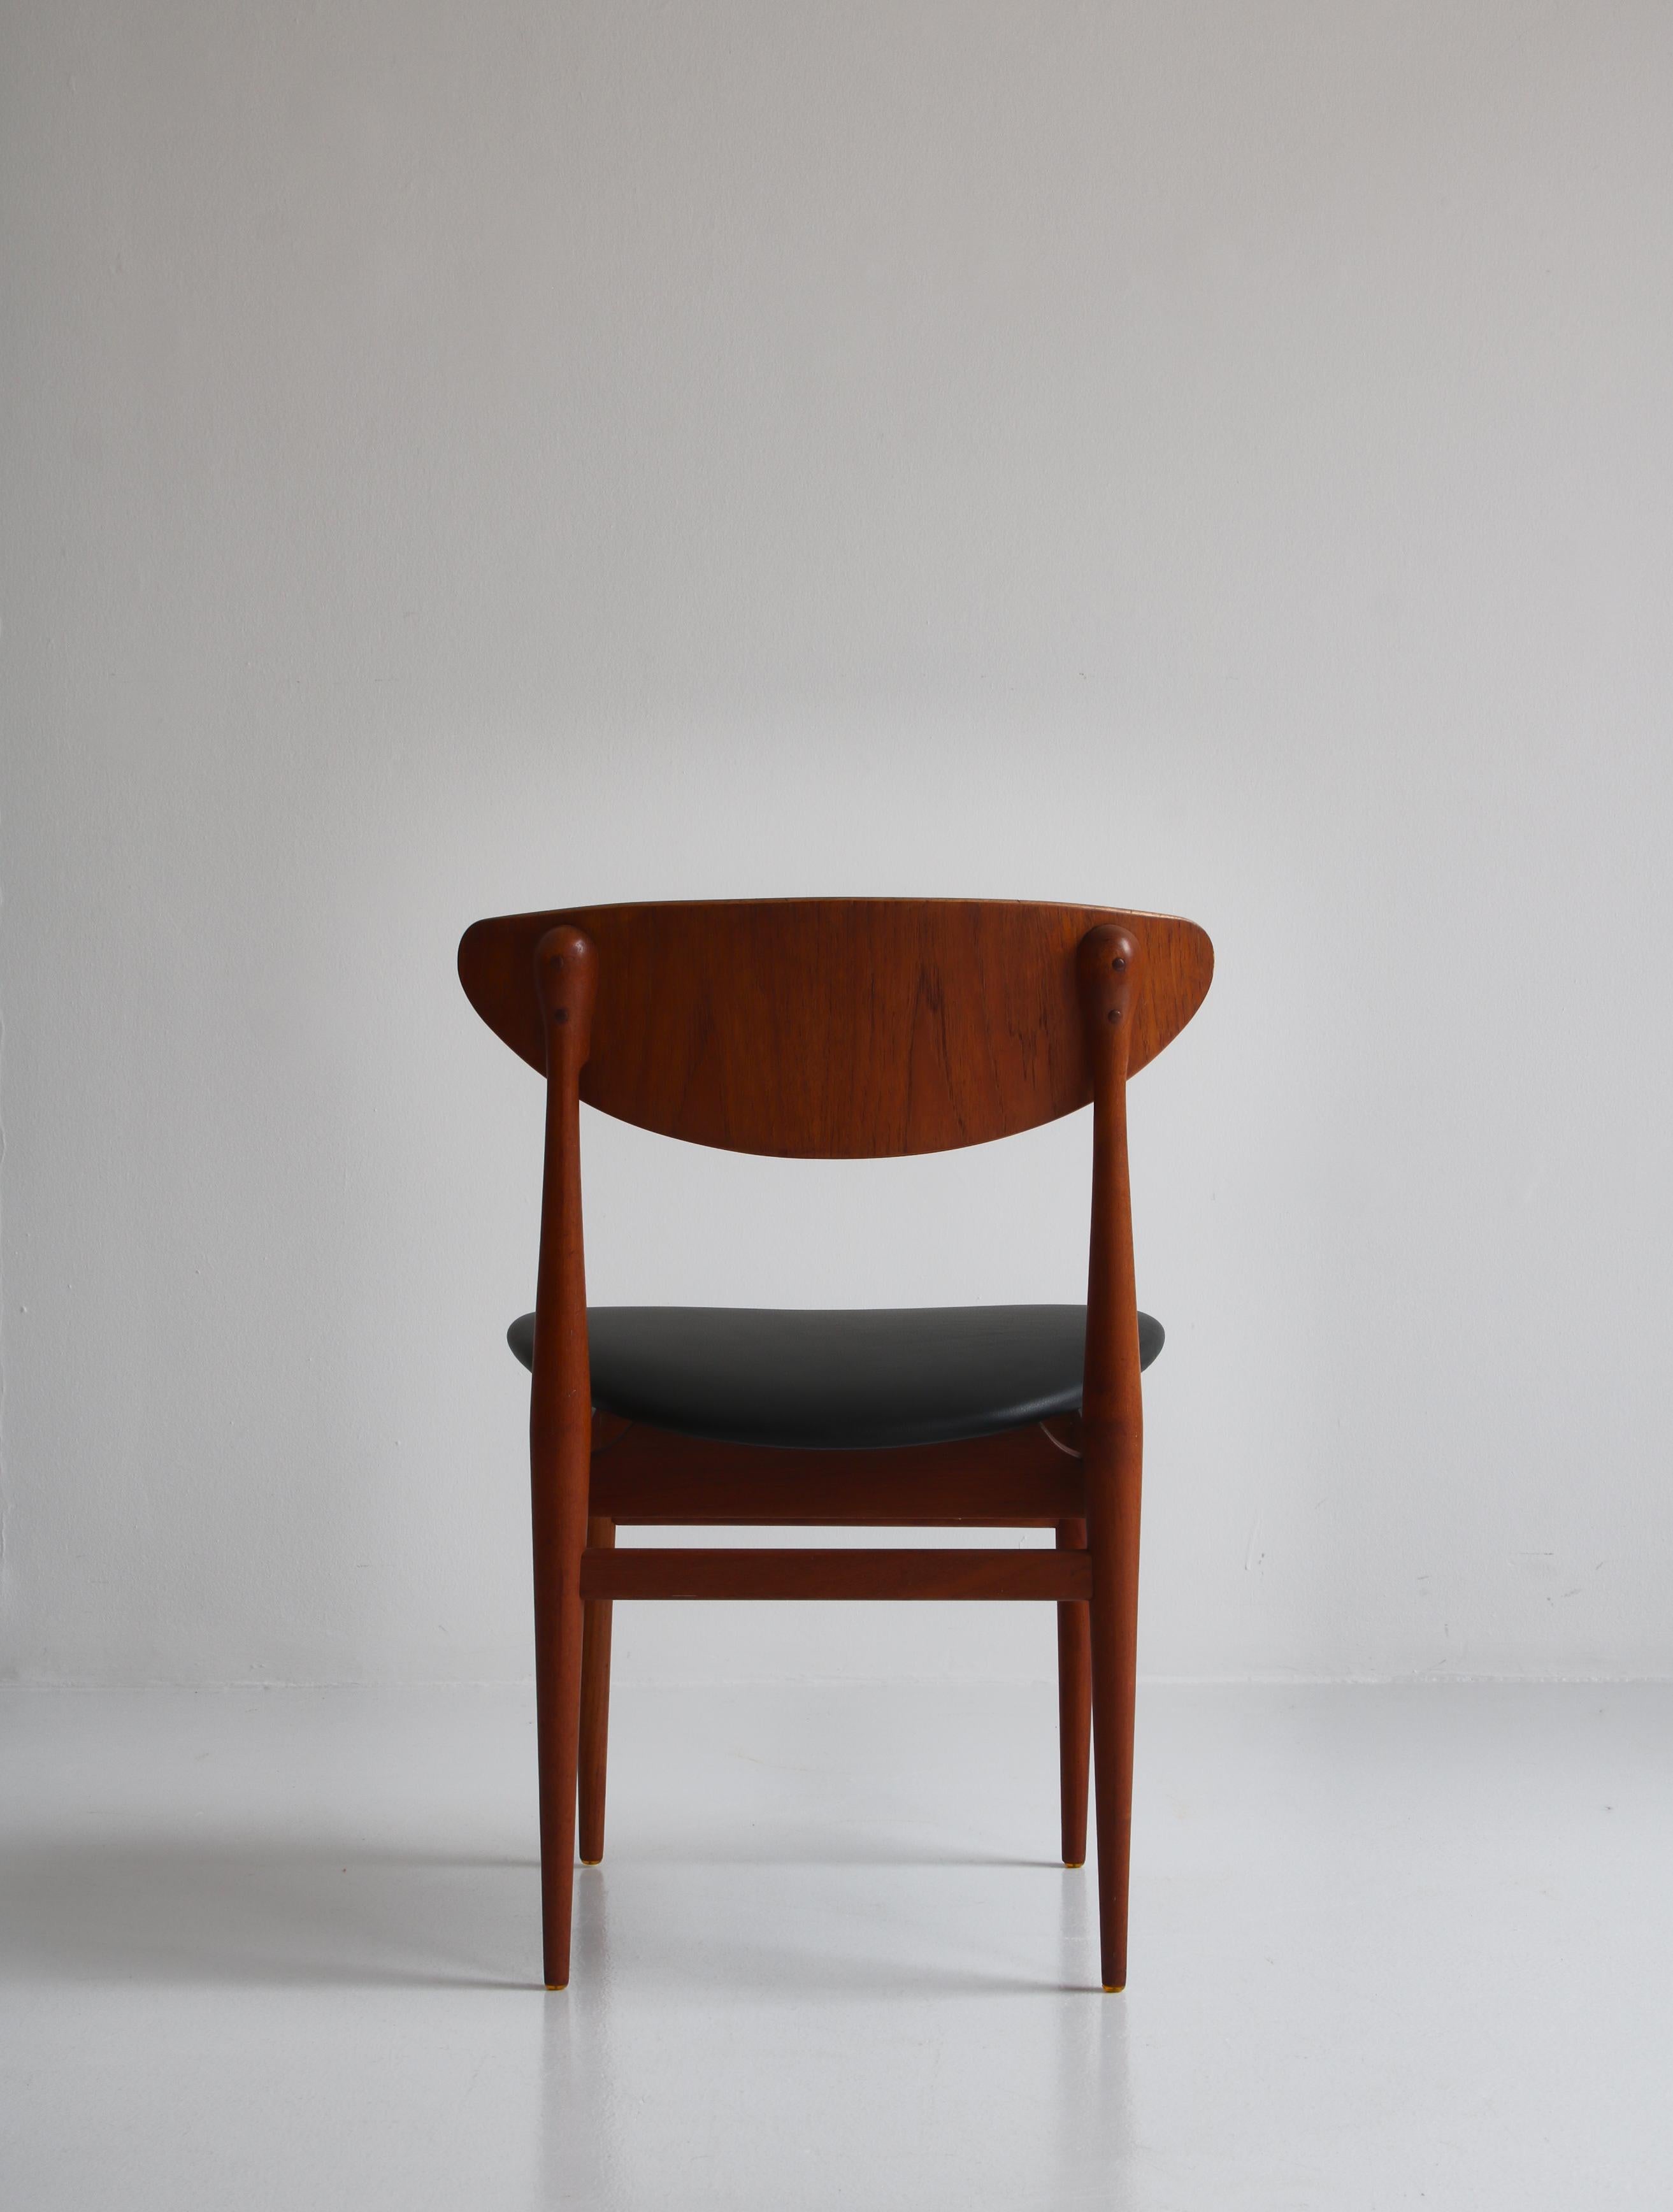 Mid-20th Century Set of 8 Danish Modern Dining Chairs Teak and Black Leather by Inge Rubino, 1963